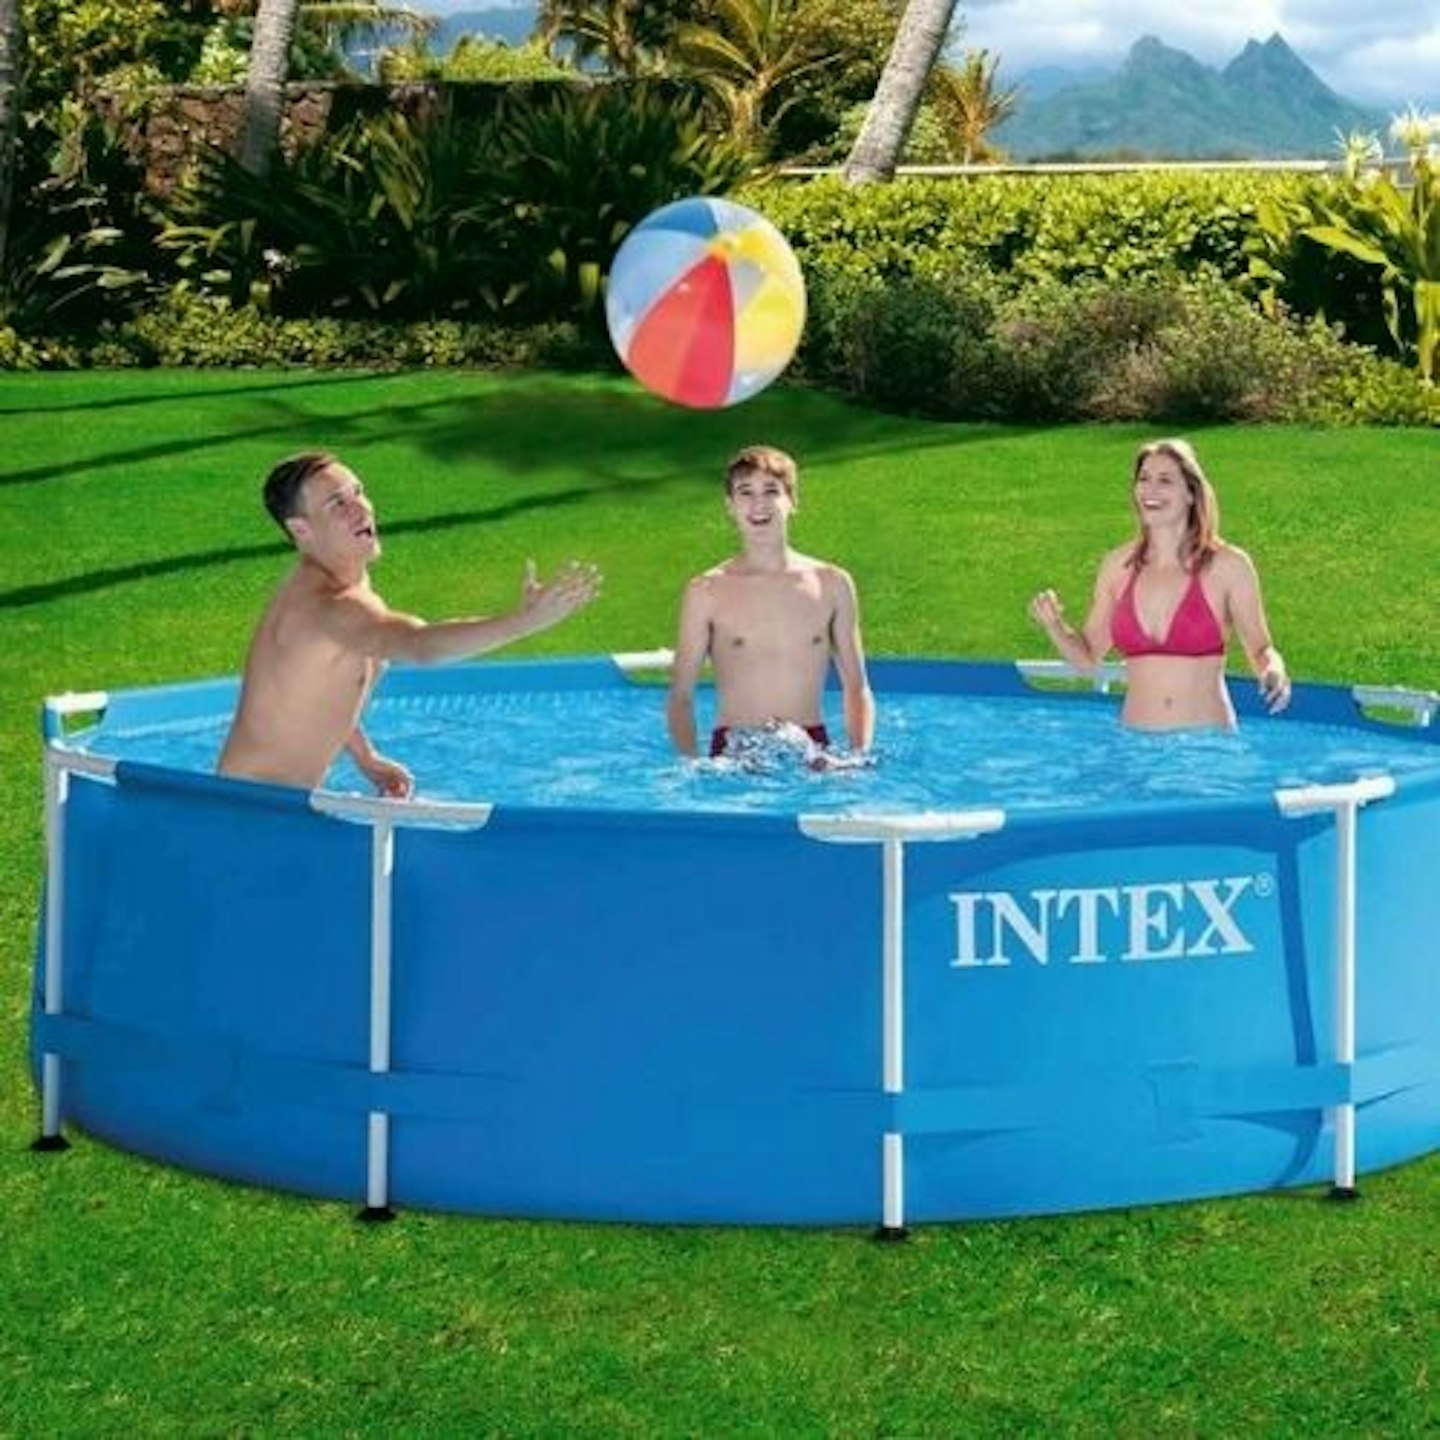 Intex 28202UK 10ft X 30in Metal Frame Swimming Pool with Filter Pump